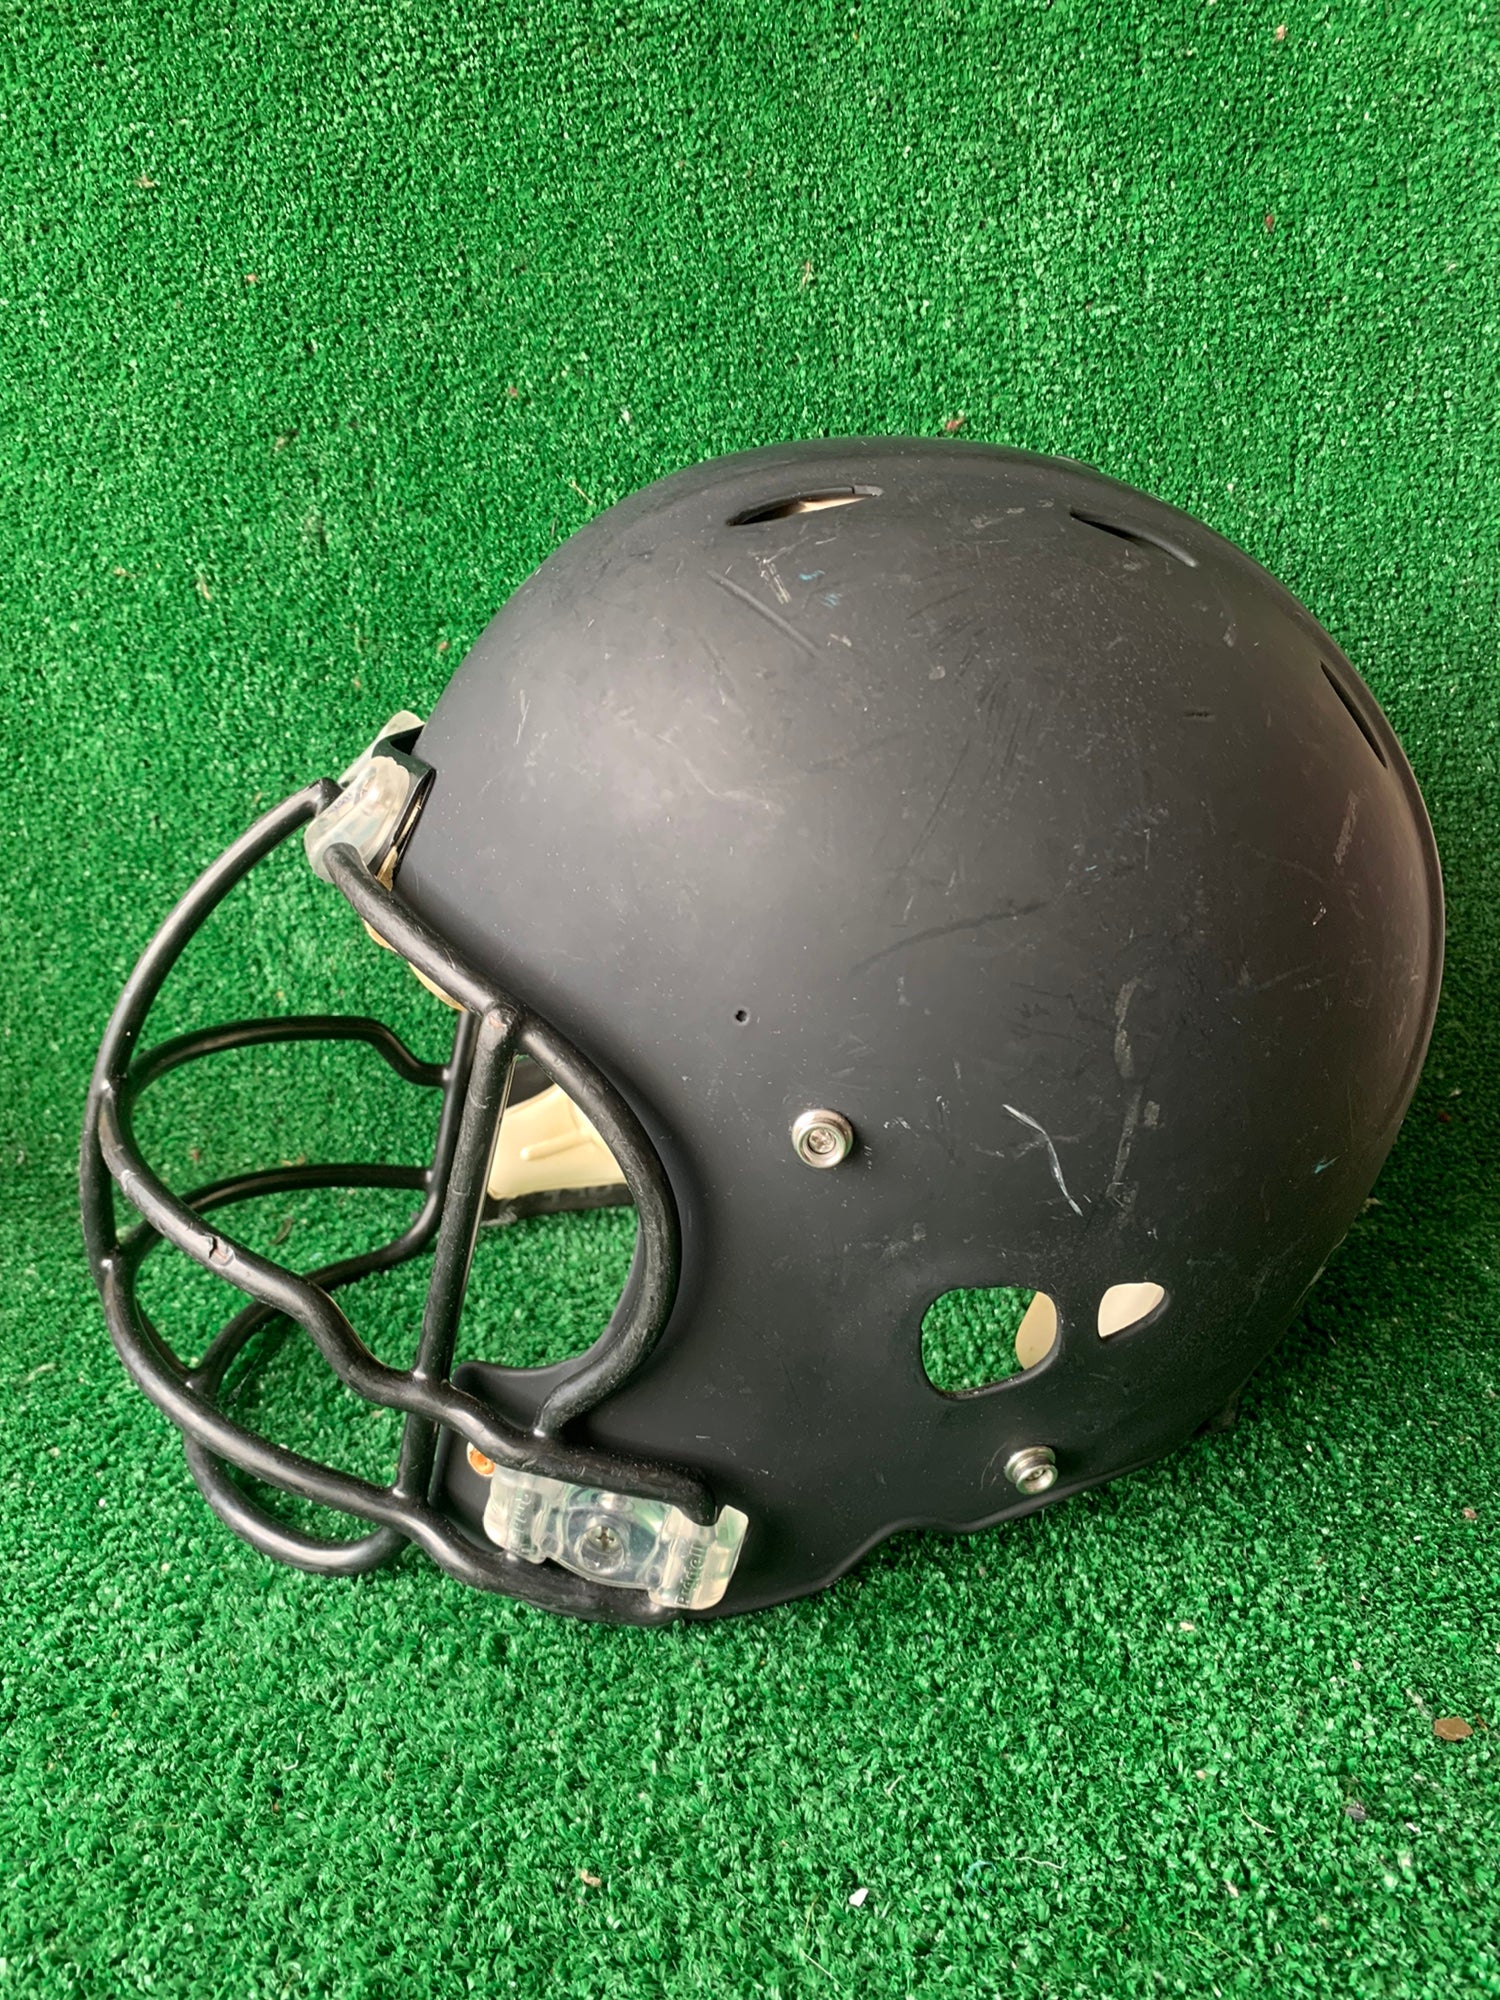 Adult Large - Riddell Revolution Football Helmet - Black 